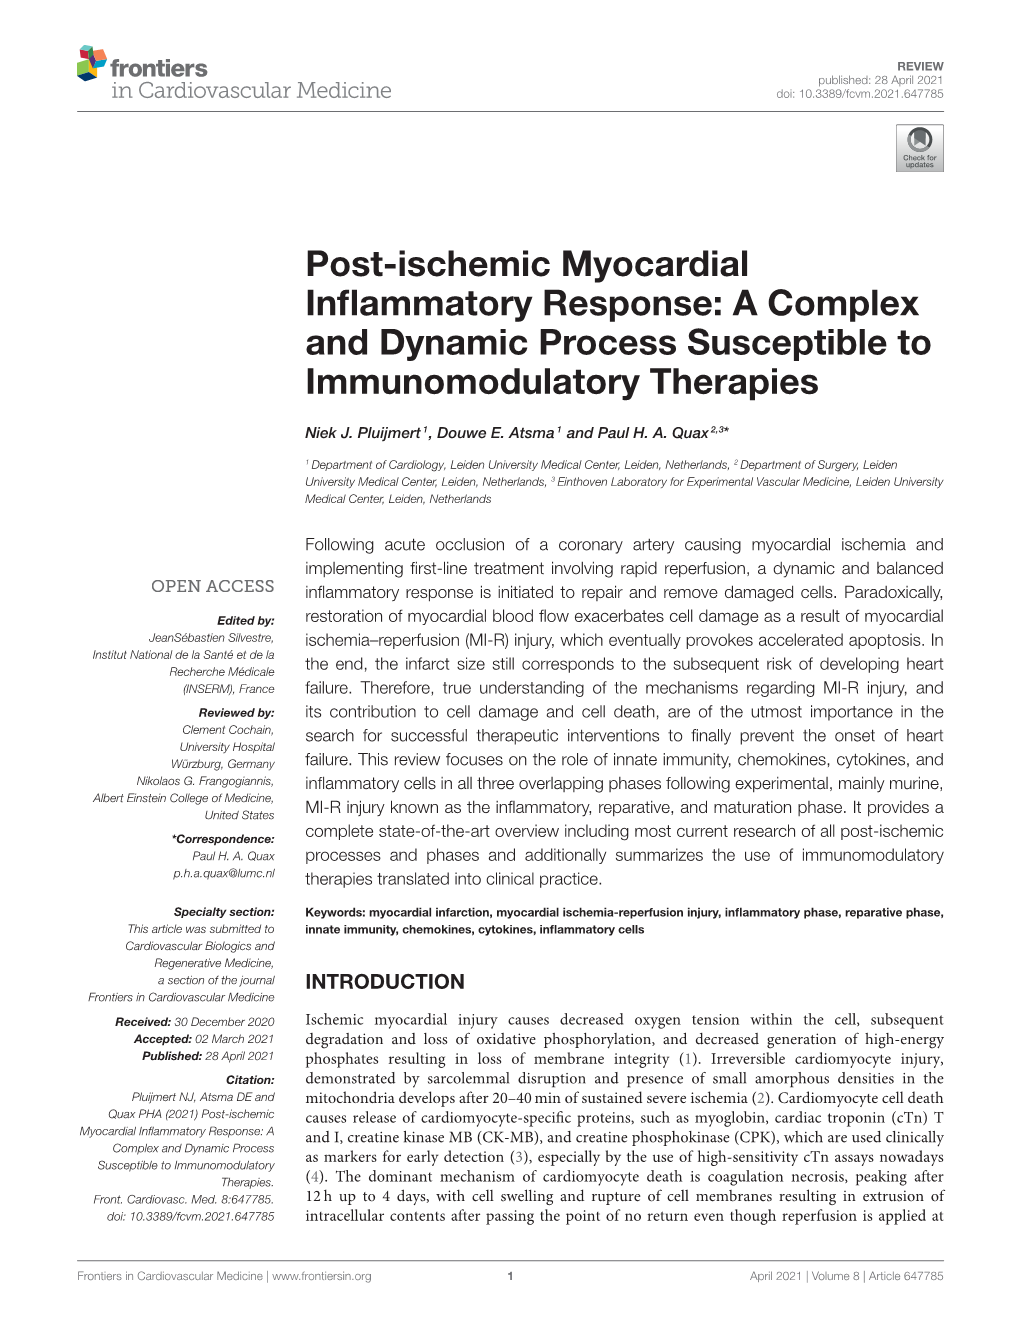 Post-Ischemic Myocardial Inflammatory Response